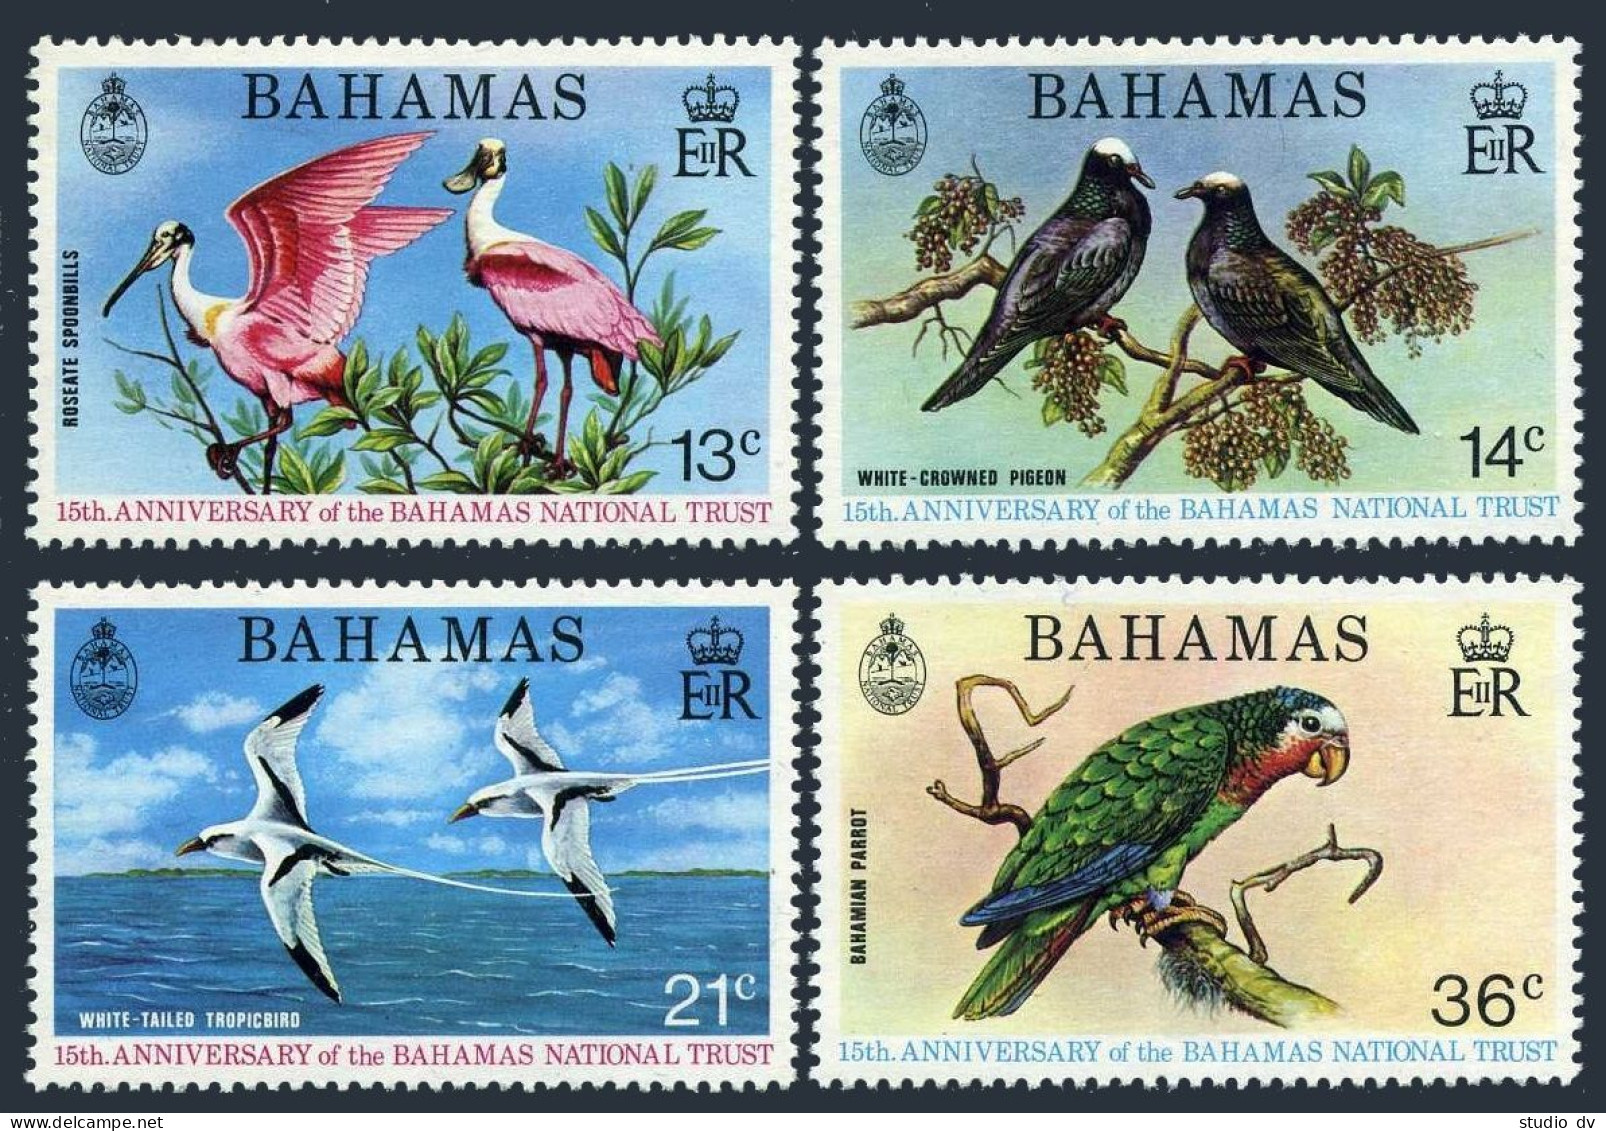 Bahamas 362-365,hinged.Mi 370-373. Protected Birds 1974.Spoonbills,Pigeon,Parrot - Bahamas (1973-...)